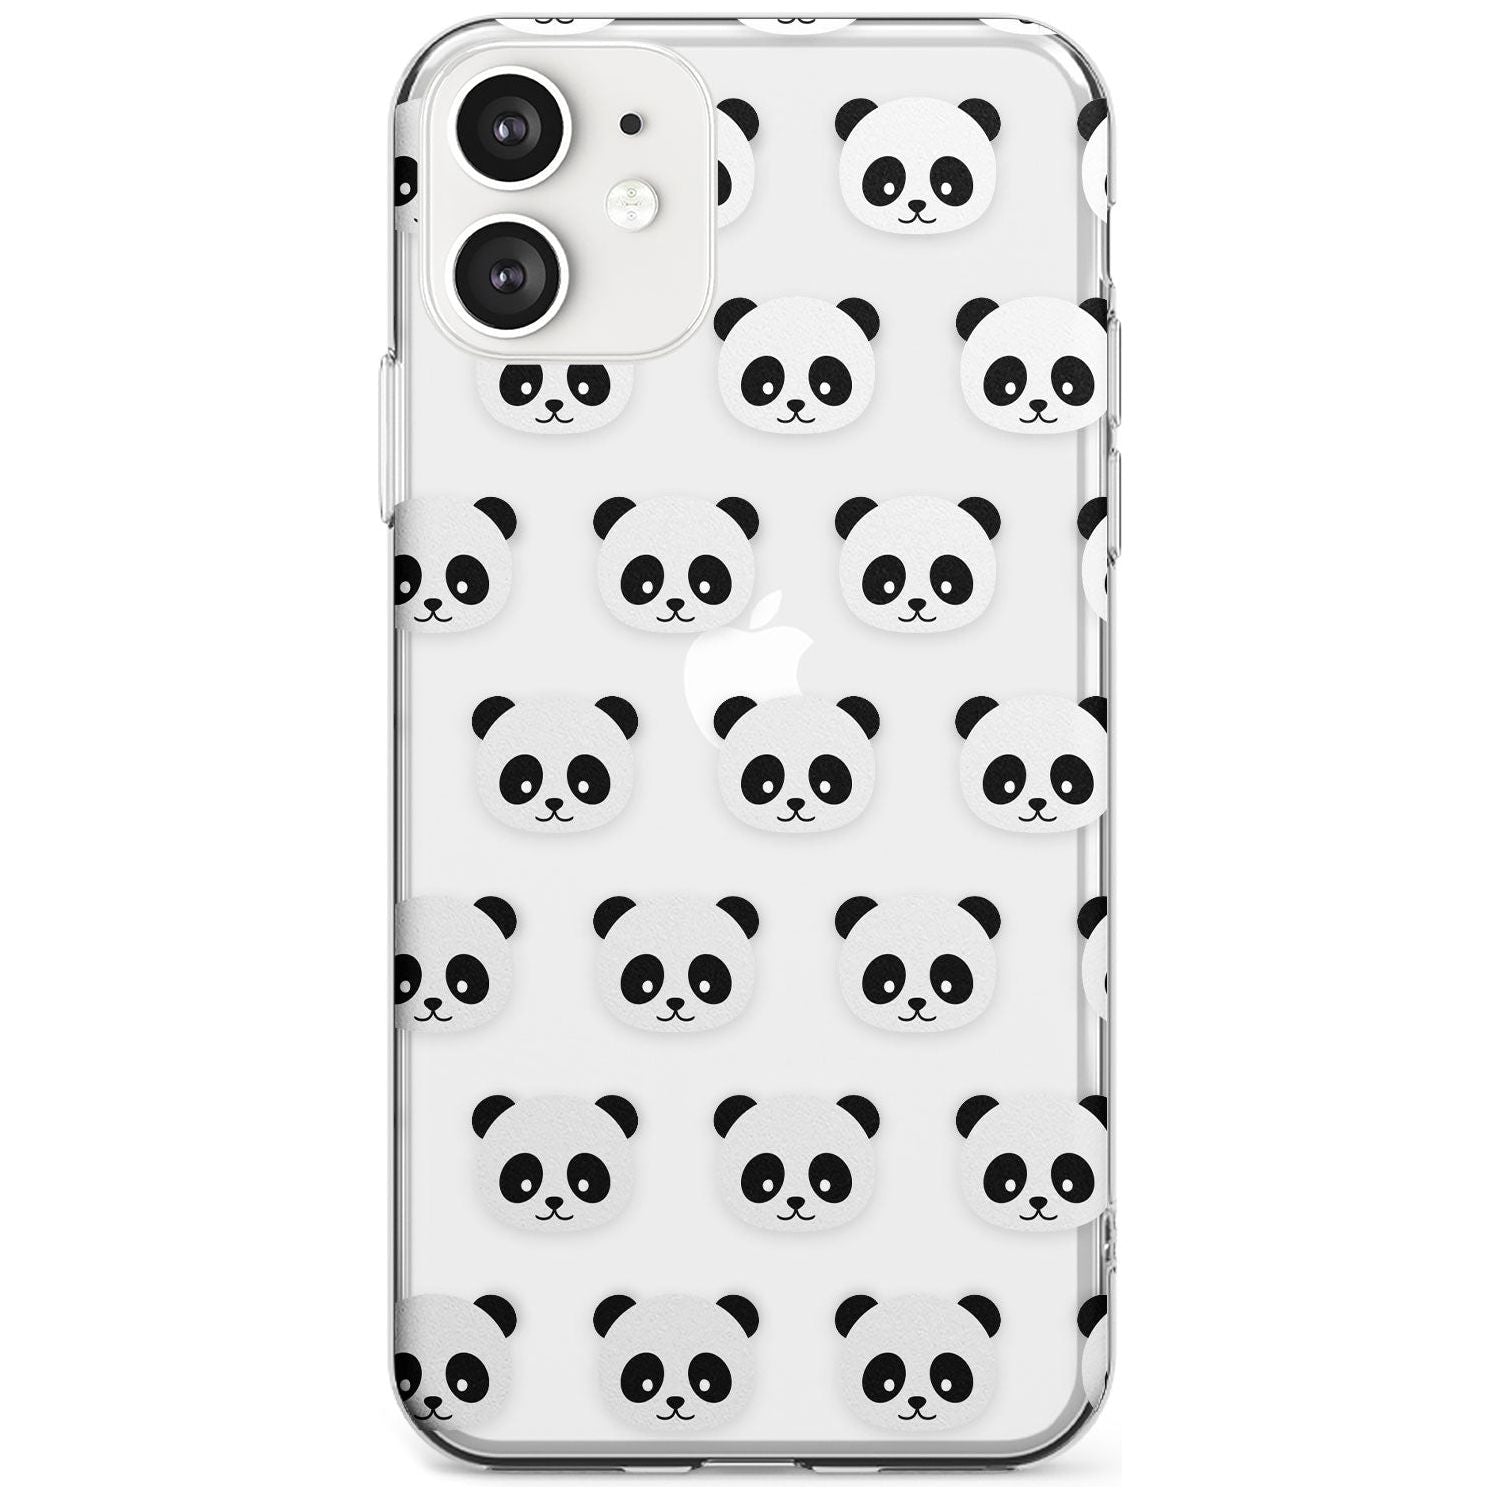 Panda Face Pattern Black Impact Phone Case for iPhone 11